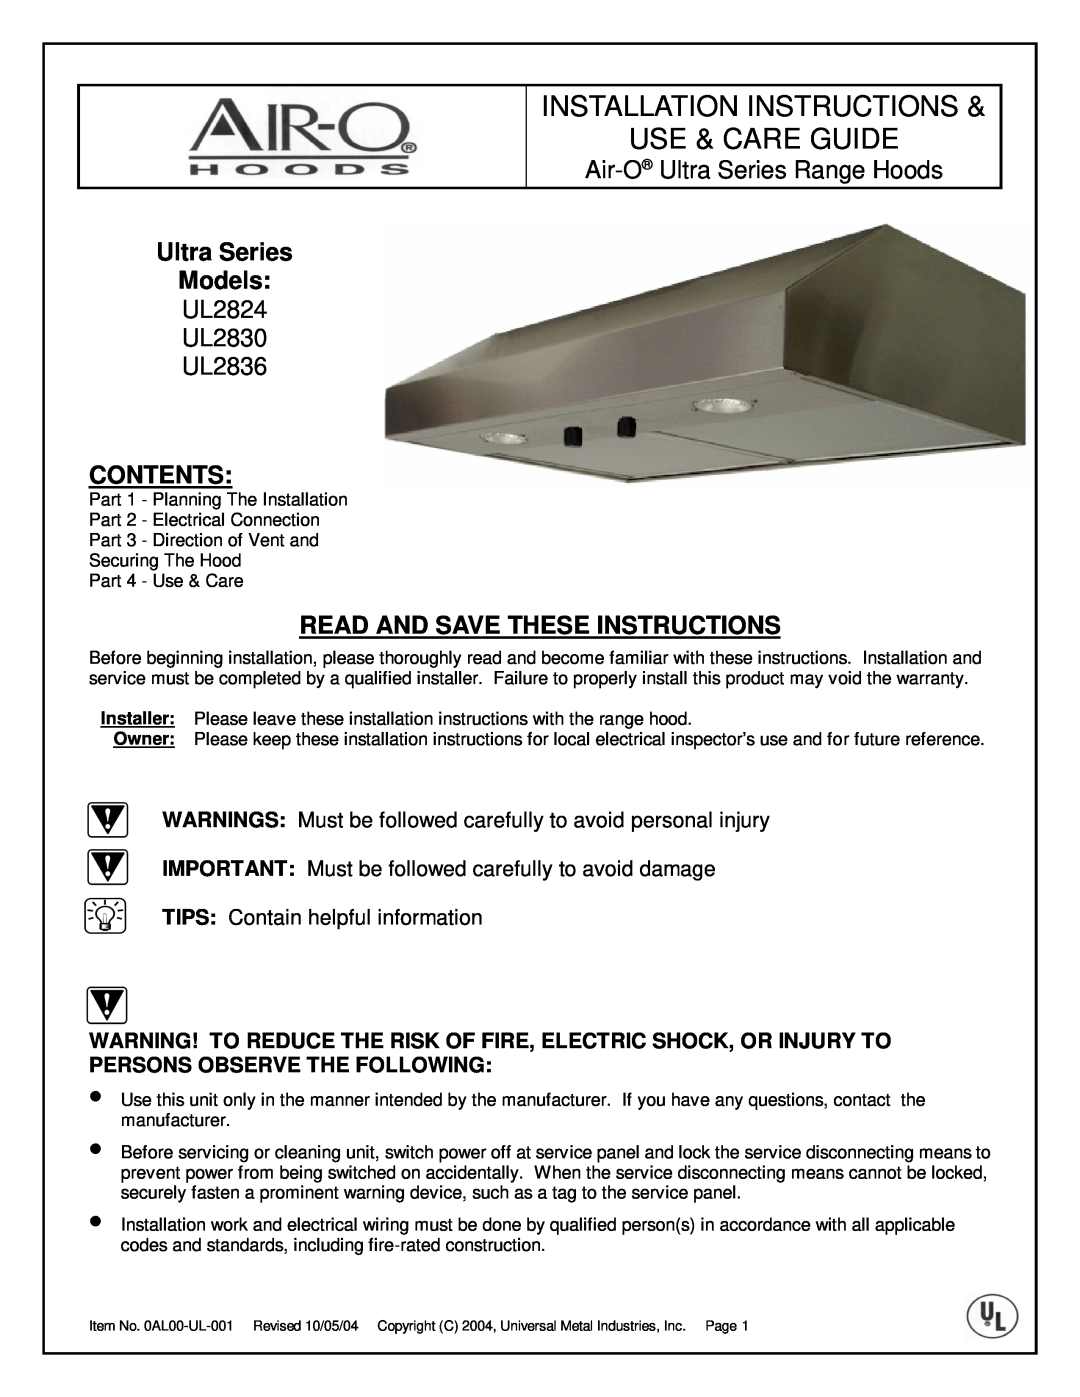 Universal Metal Industries UL2824 installation instructions Ultra Series Models, Contents, Air-O Ultra Series Range Hoods 